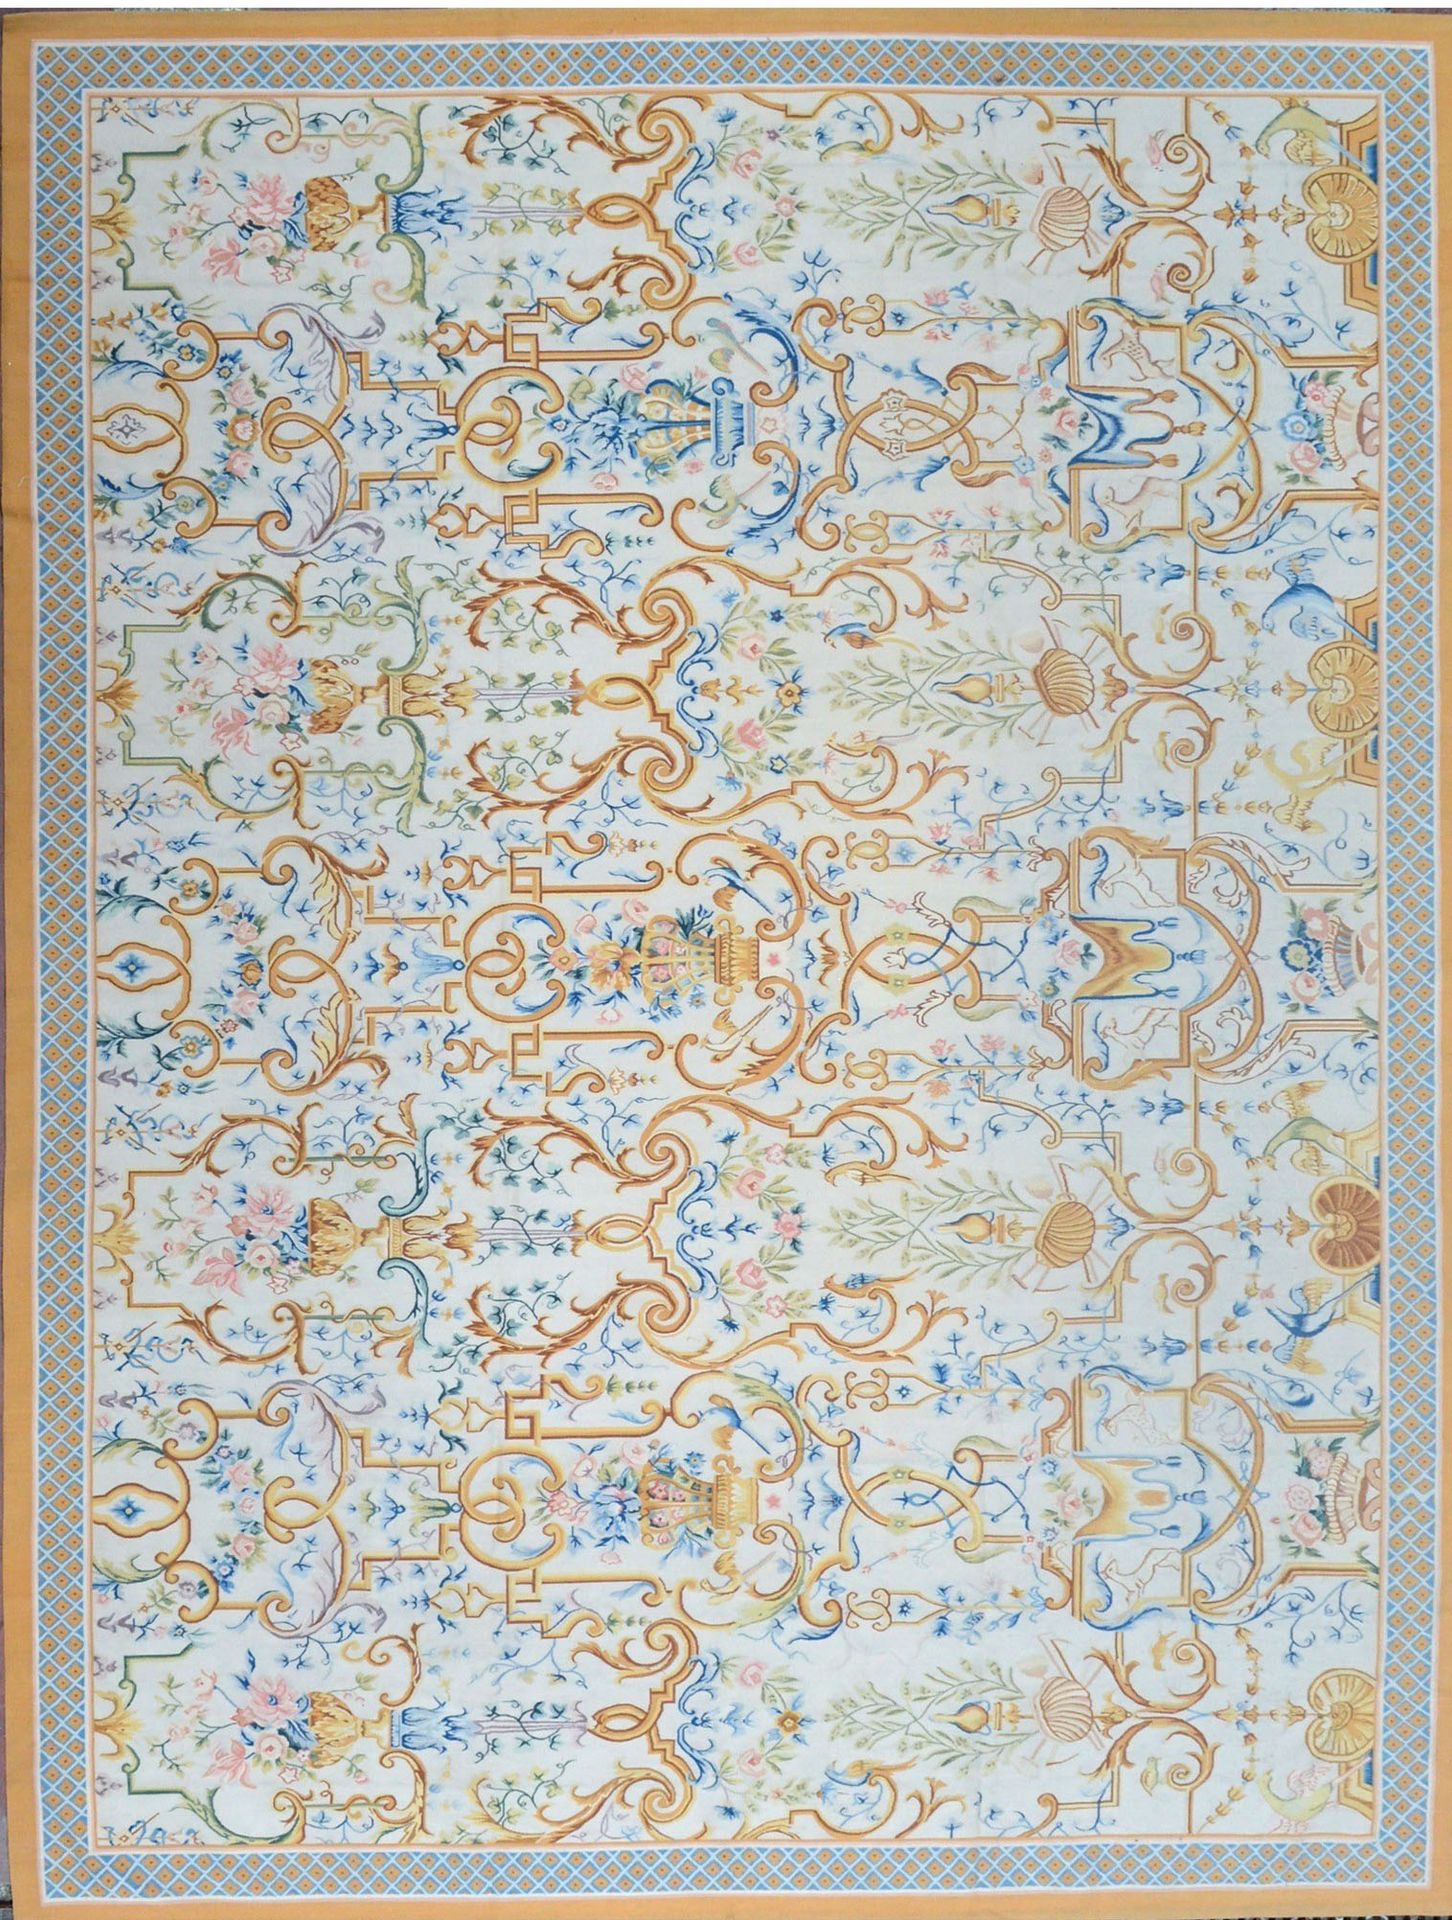 Null 重要而精美的奥布松风格地毯

XX

尺寸360 x 285厘米

技术特点

针线活，在棉花基础上用羊毛纱线的挂毯技术

总体状况良好

美丽的图形&hellip;